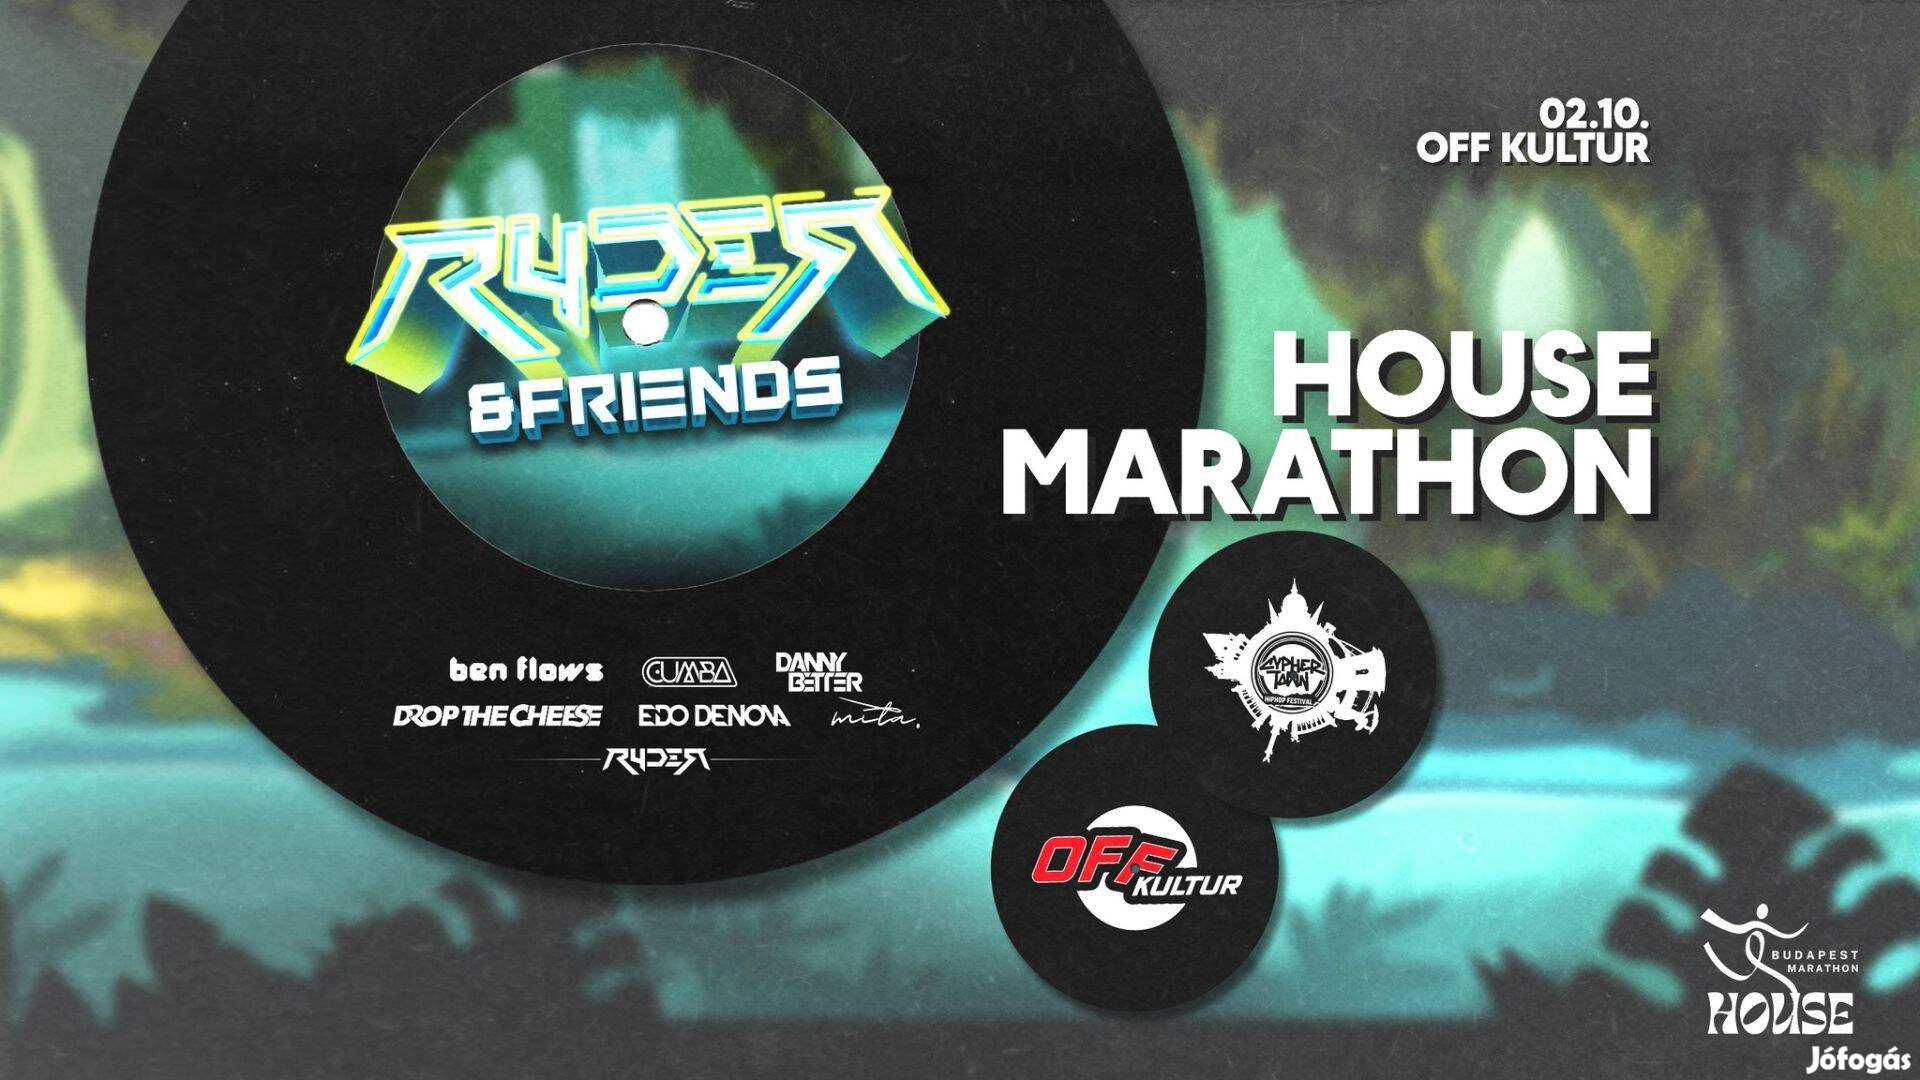 Ryder & friends / house marathon Budapest 02.10